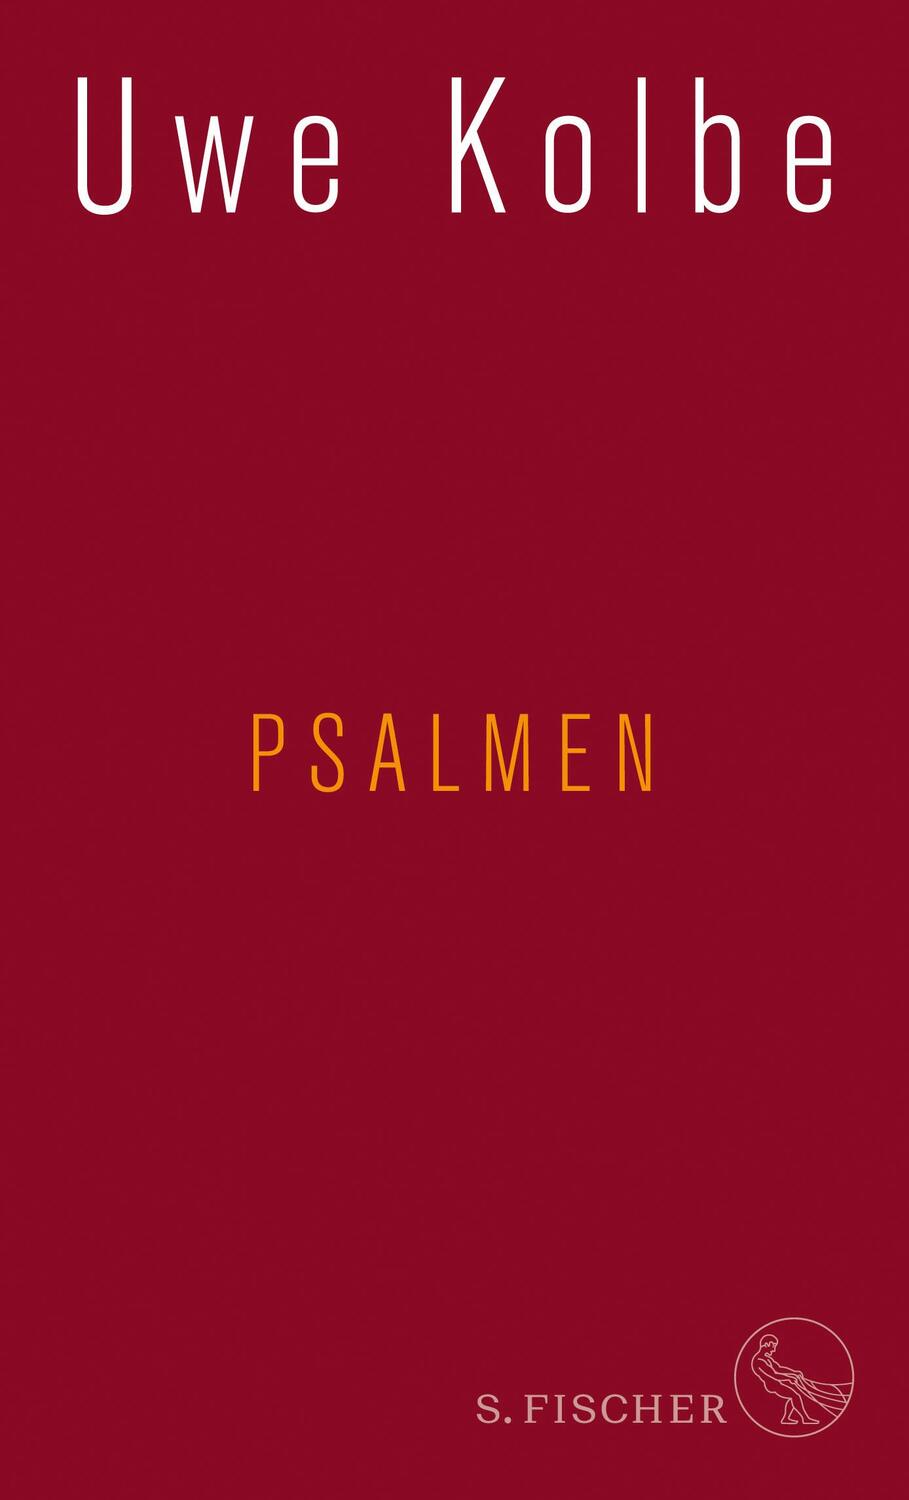 Psalmen - Kolbe, Uwe